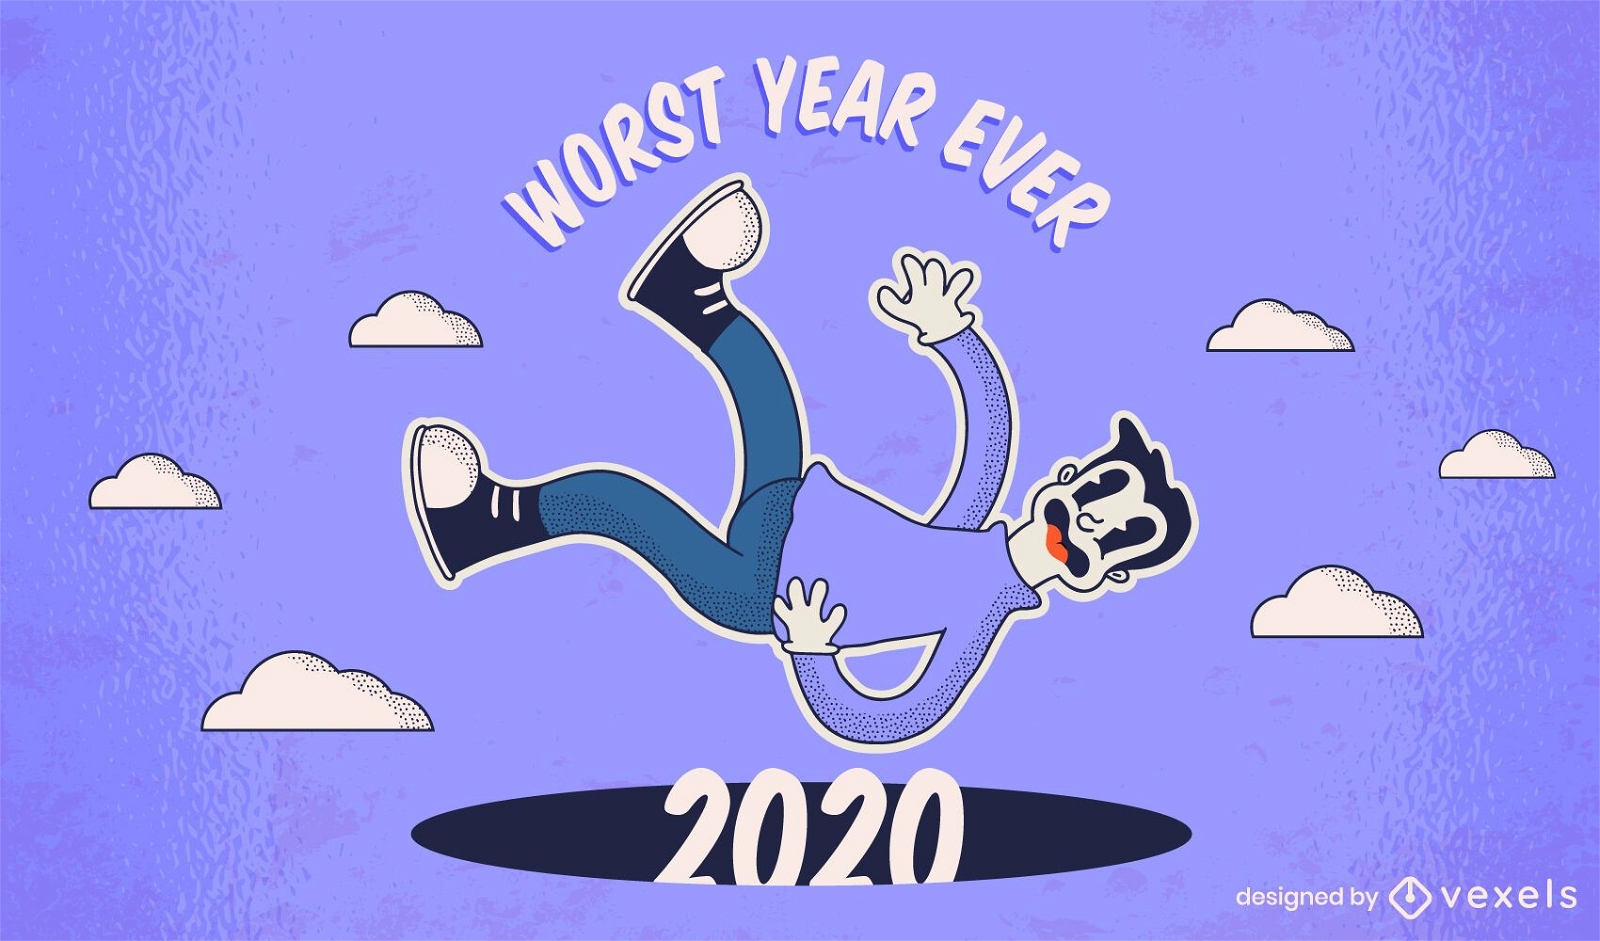 Worst year ever 2020 illustration design